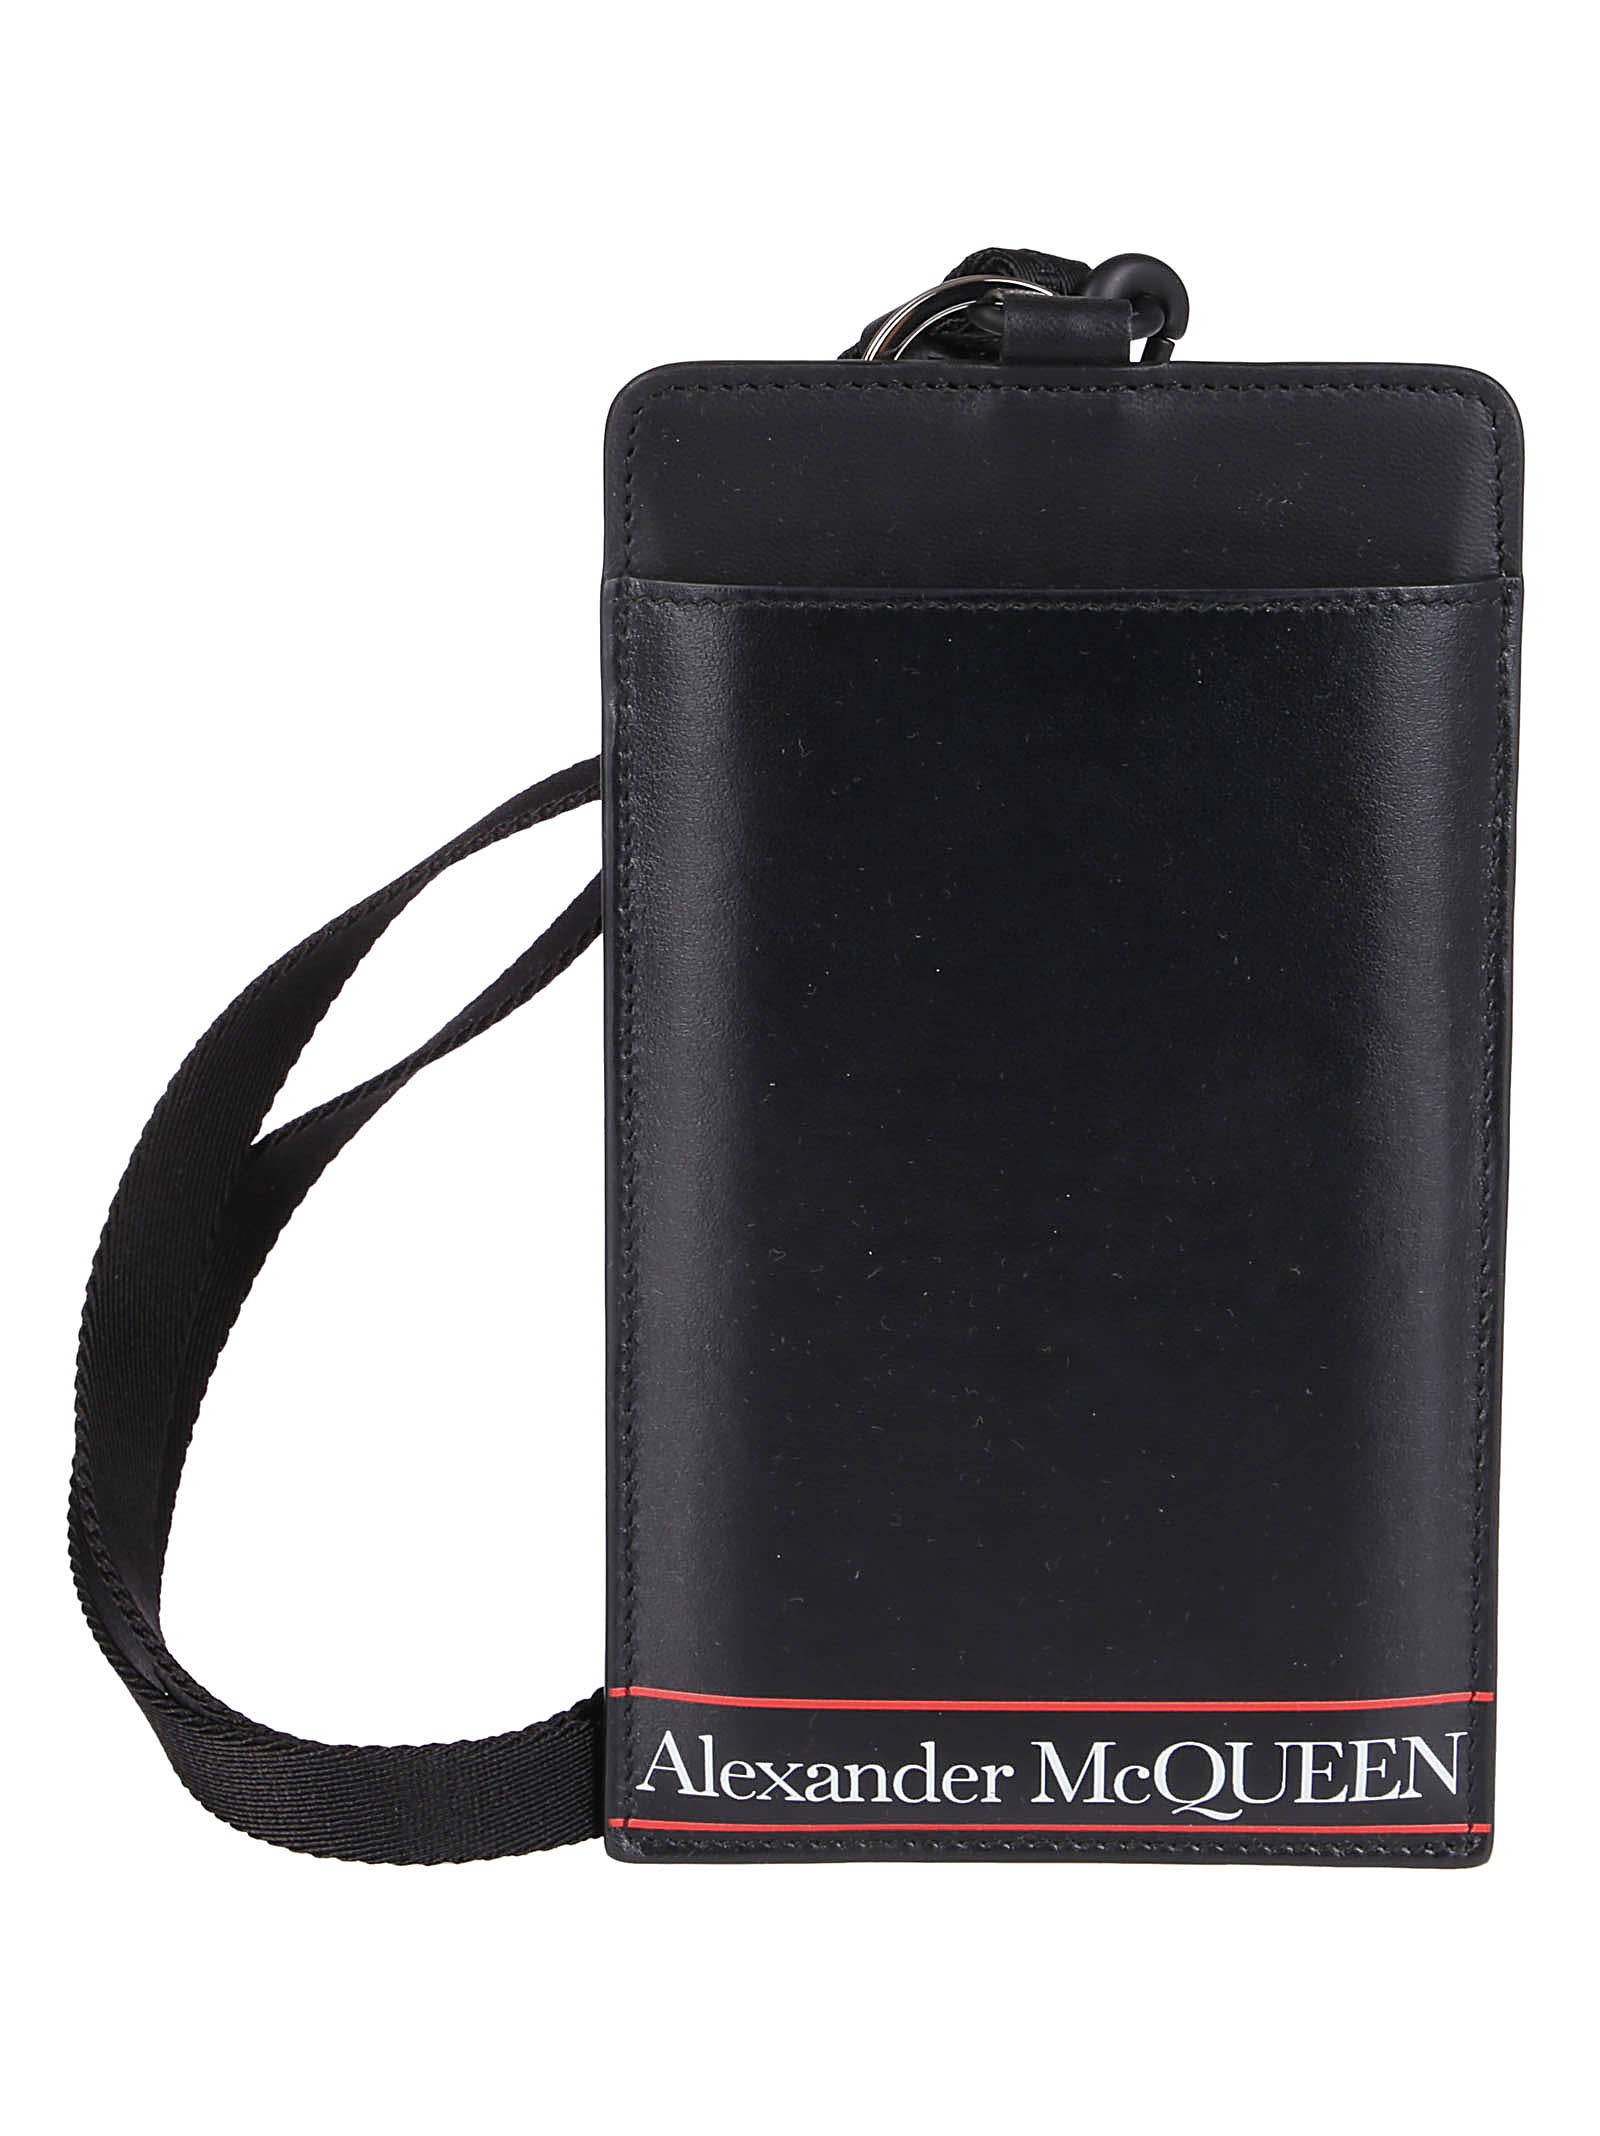 Alexander Mcqueen Black Leather Phone Case